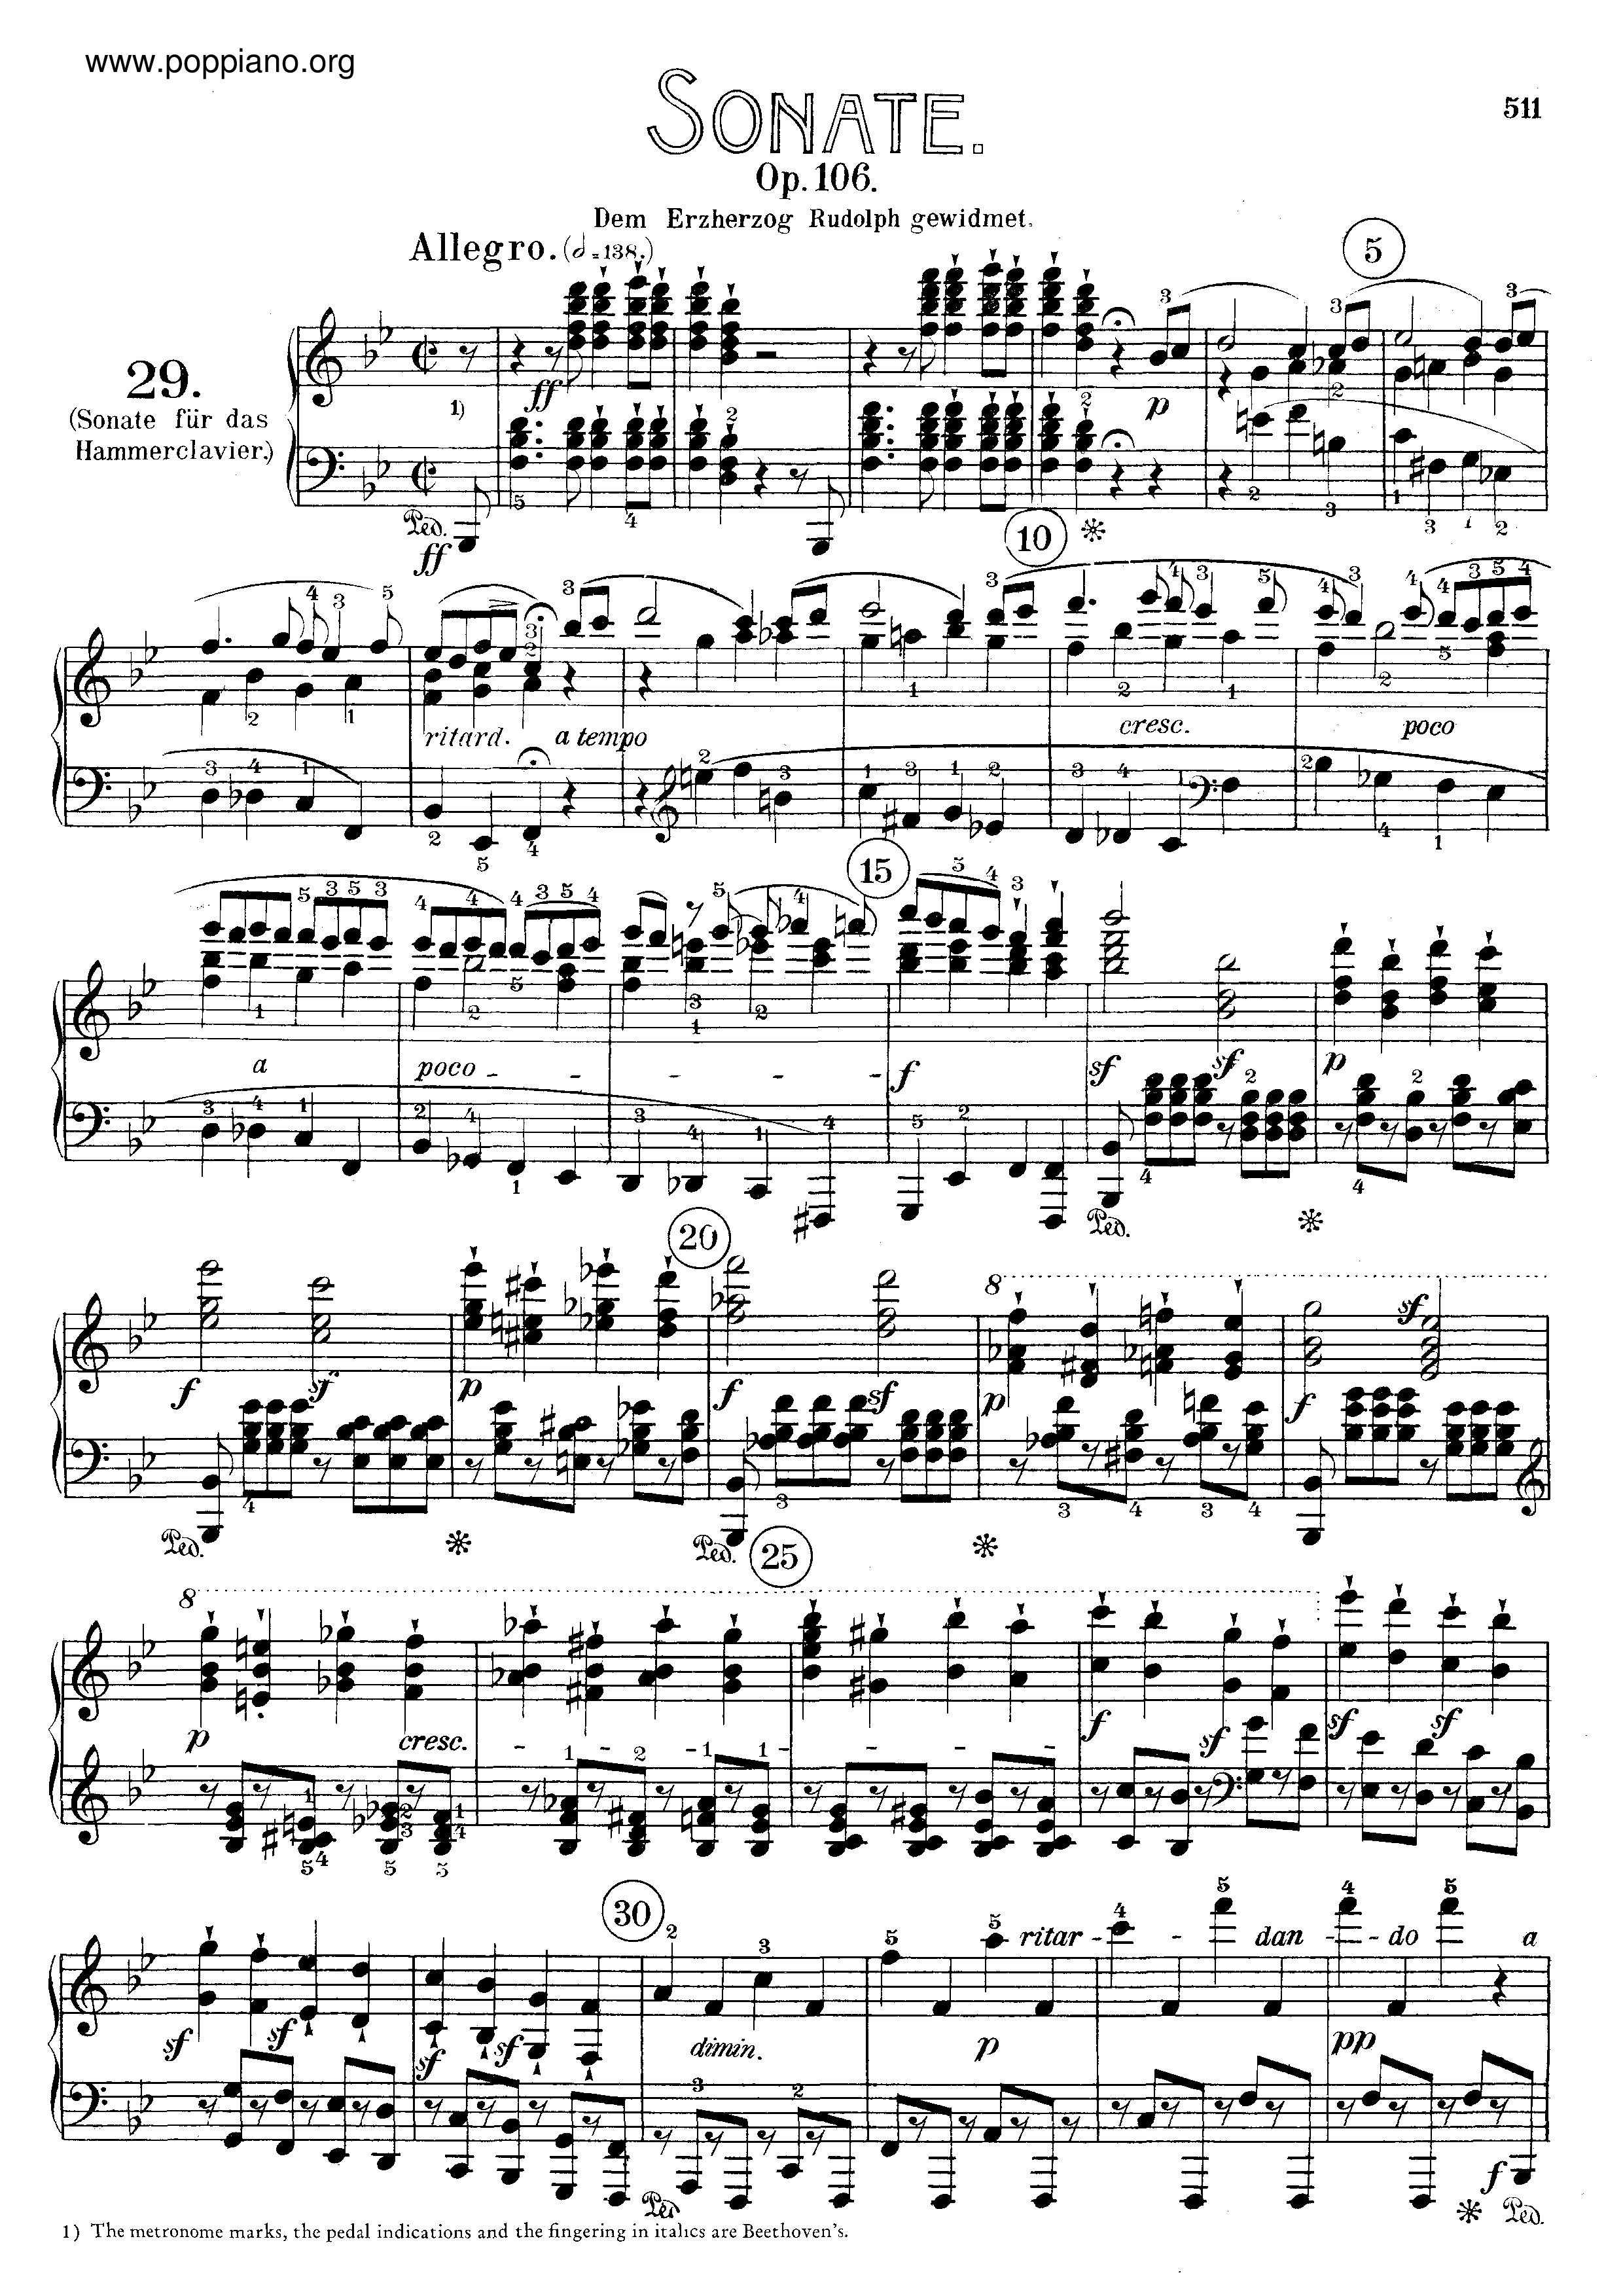 Sonata No. 29 in B-flat major琴譜